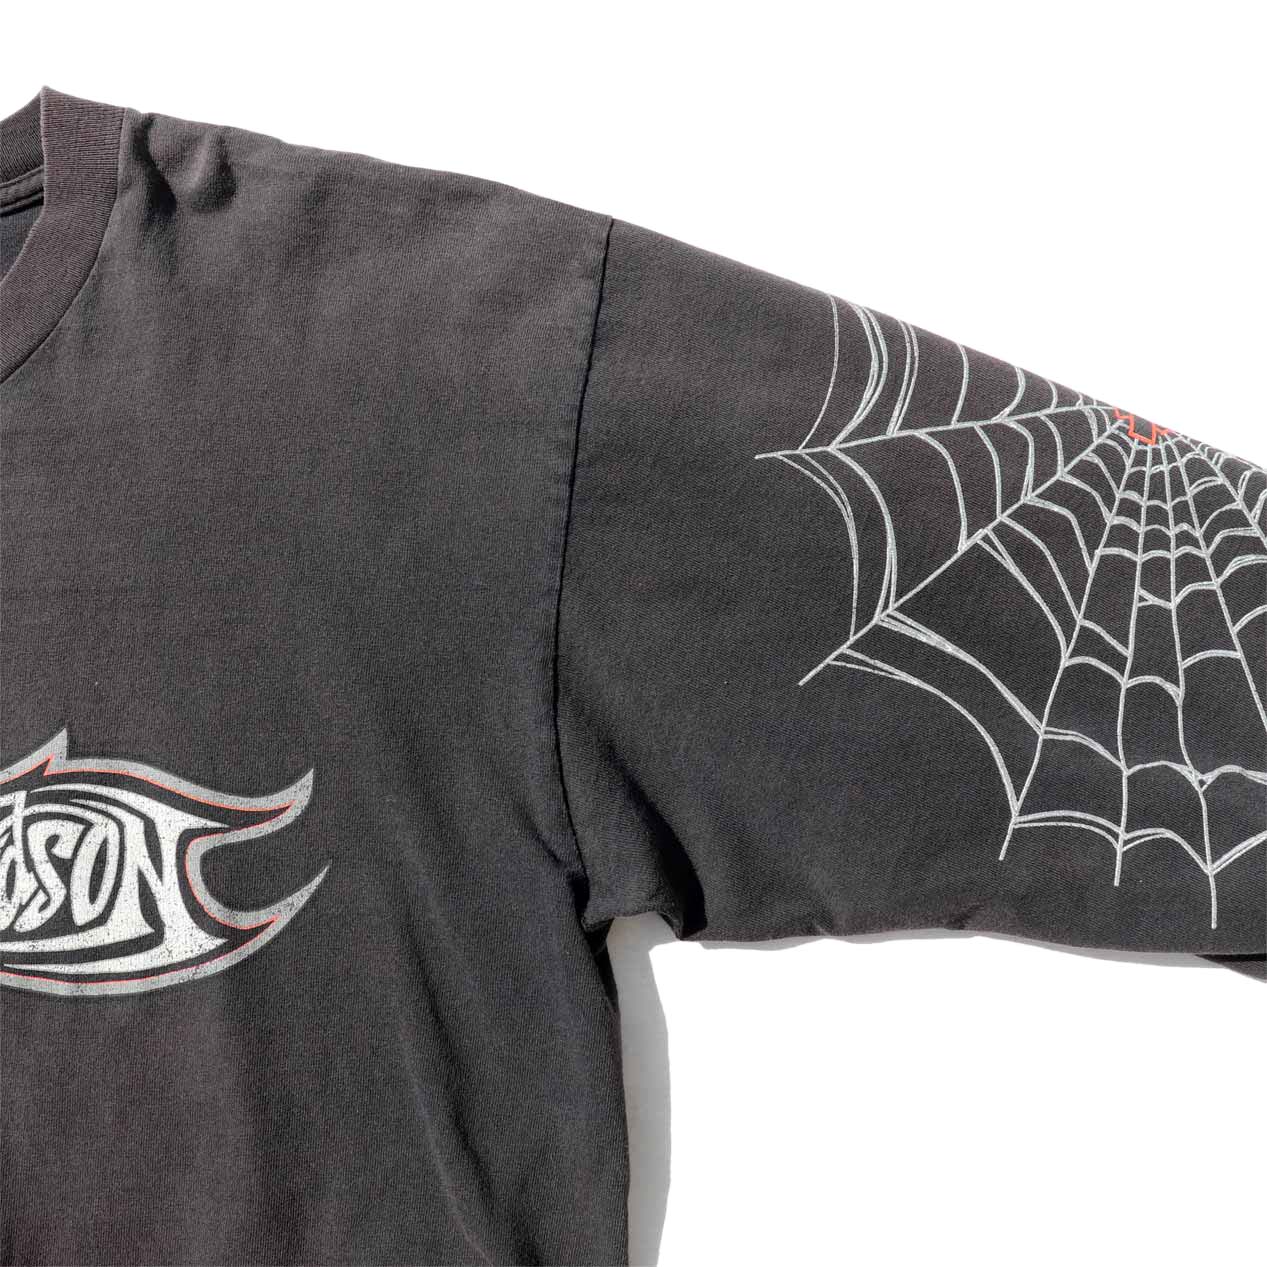 POST JUNK / 00's HARLEY-DAVIDSON Spider Web L/S T-Shirt Made In 